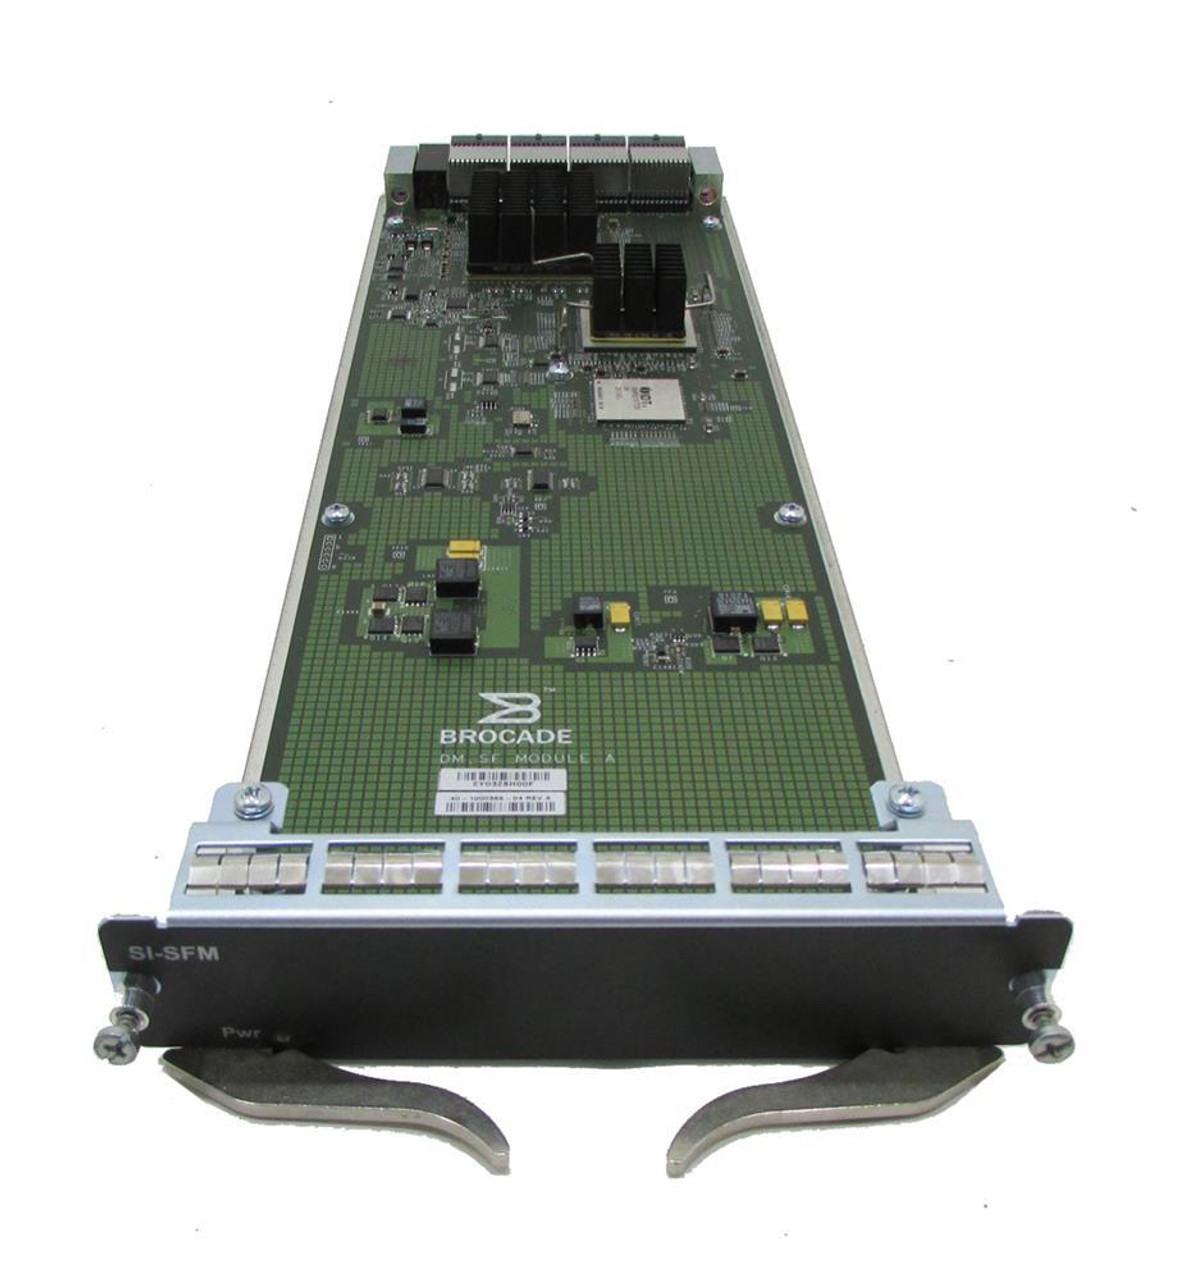 60-1001650-02 Brocade Si SFM Switch Fabric Module Serveriron Adx 4000 8000 Cha (Refurbished)